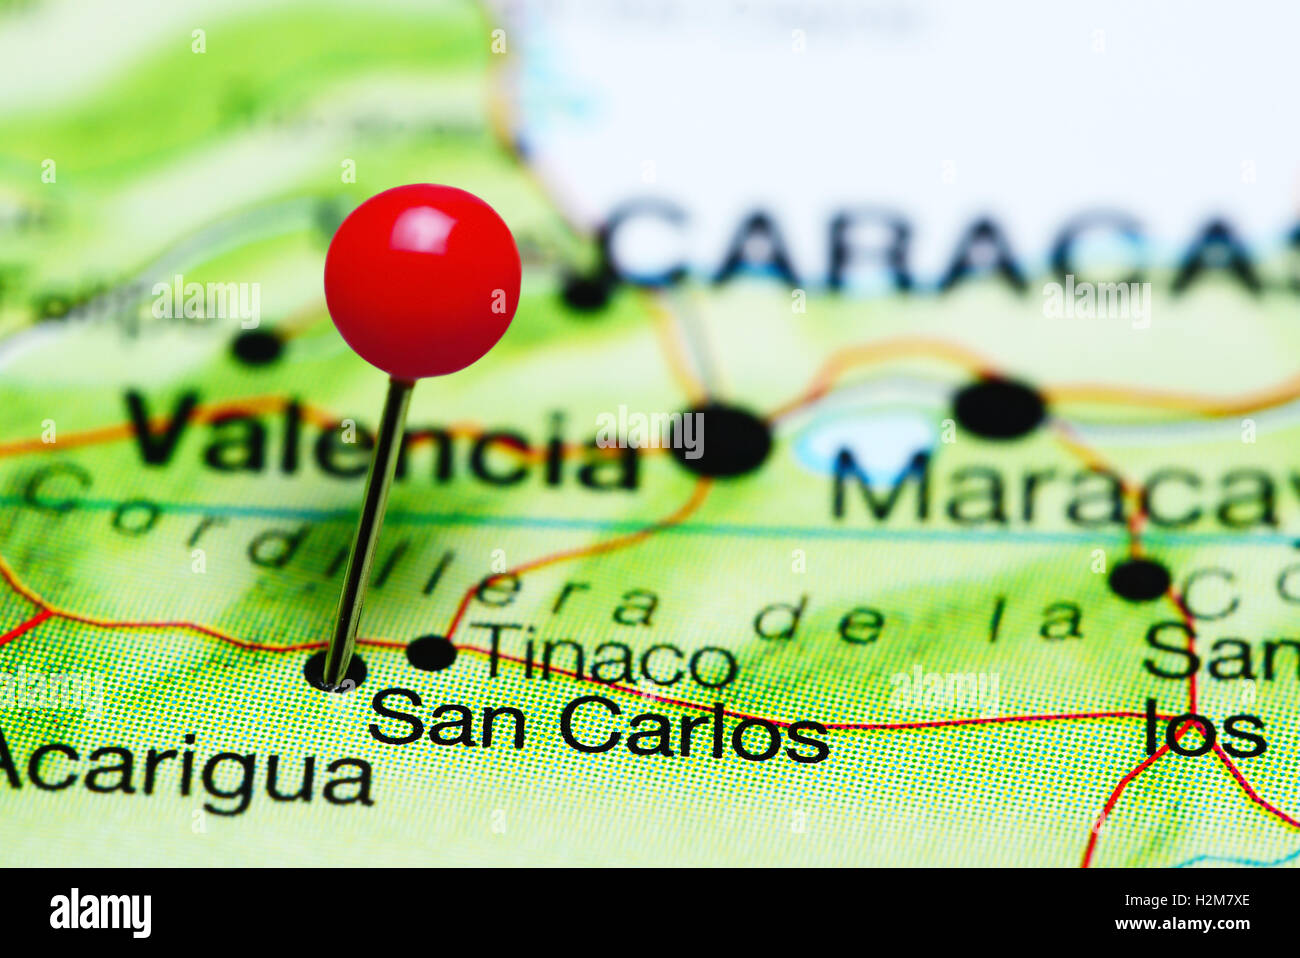 San Carlos pinned on a map of Venezuela Stock Photo